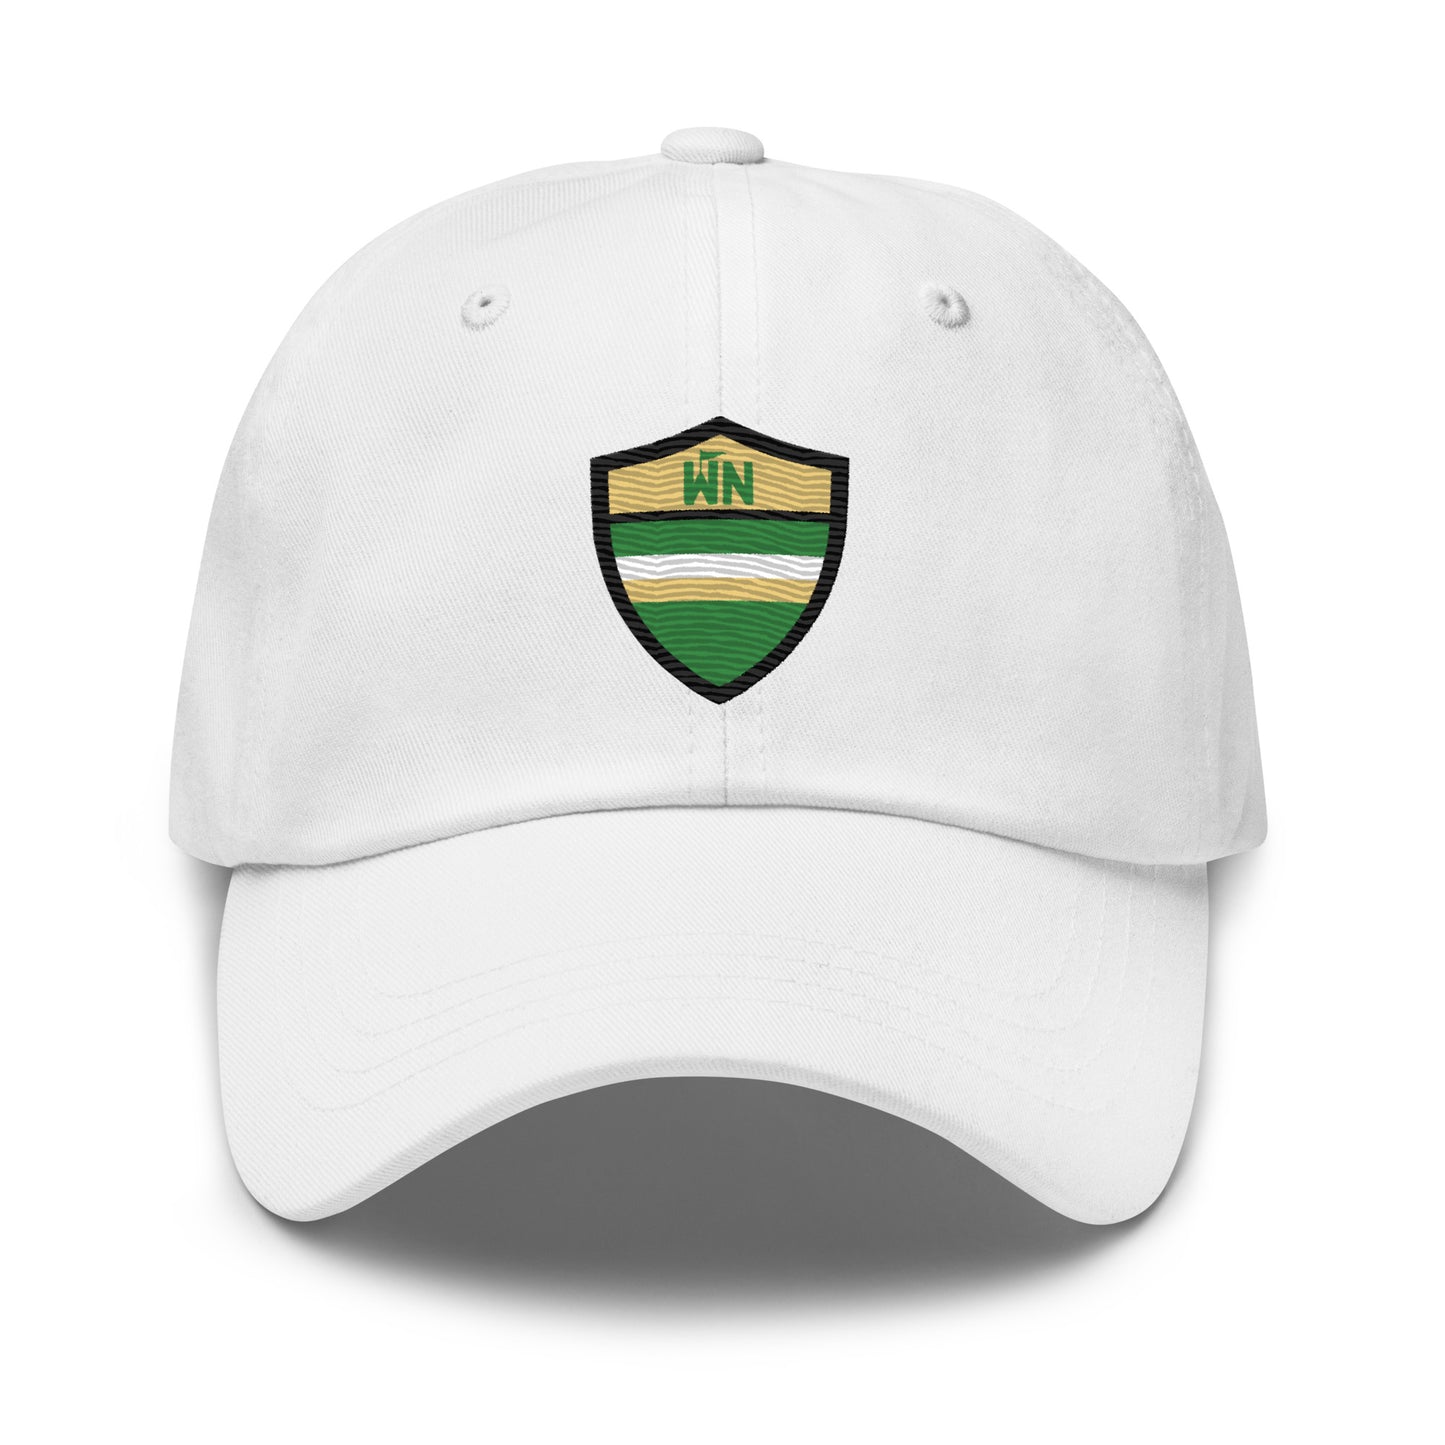 South Bend Golf Hat